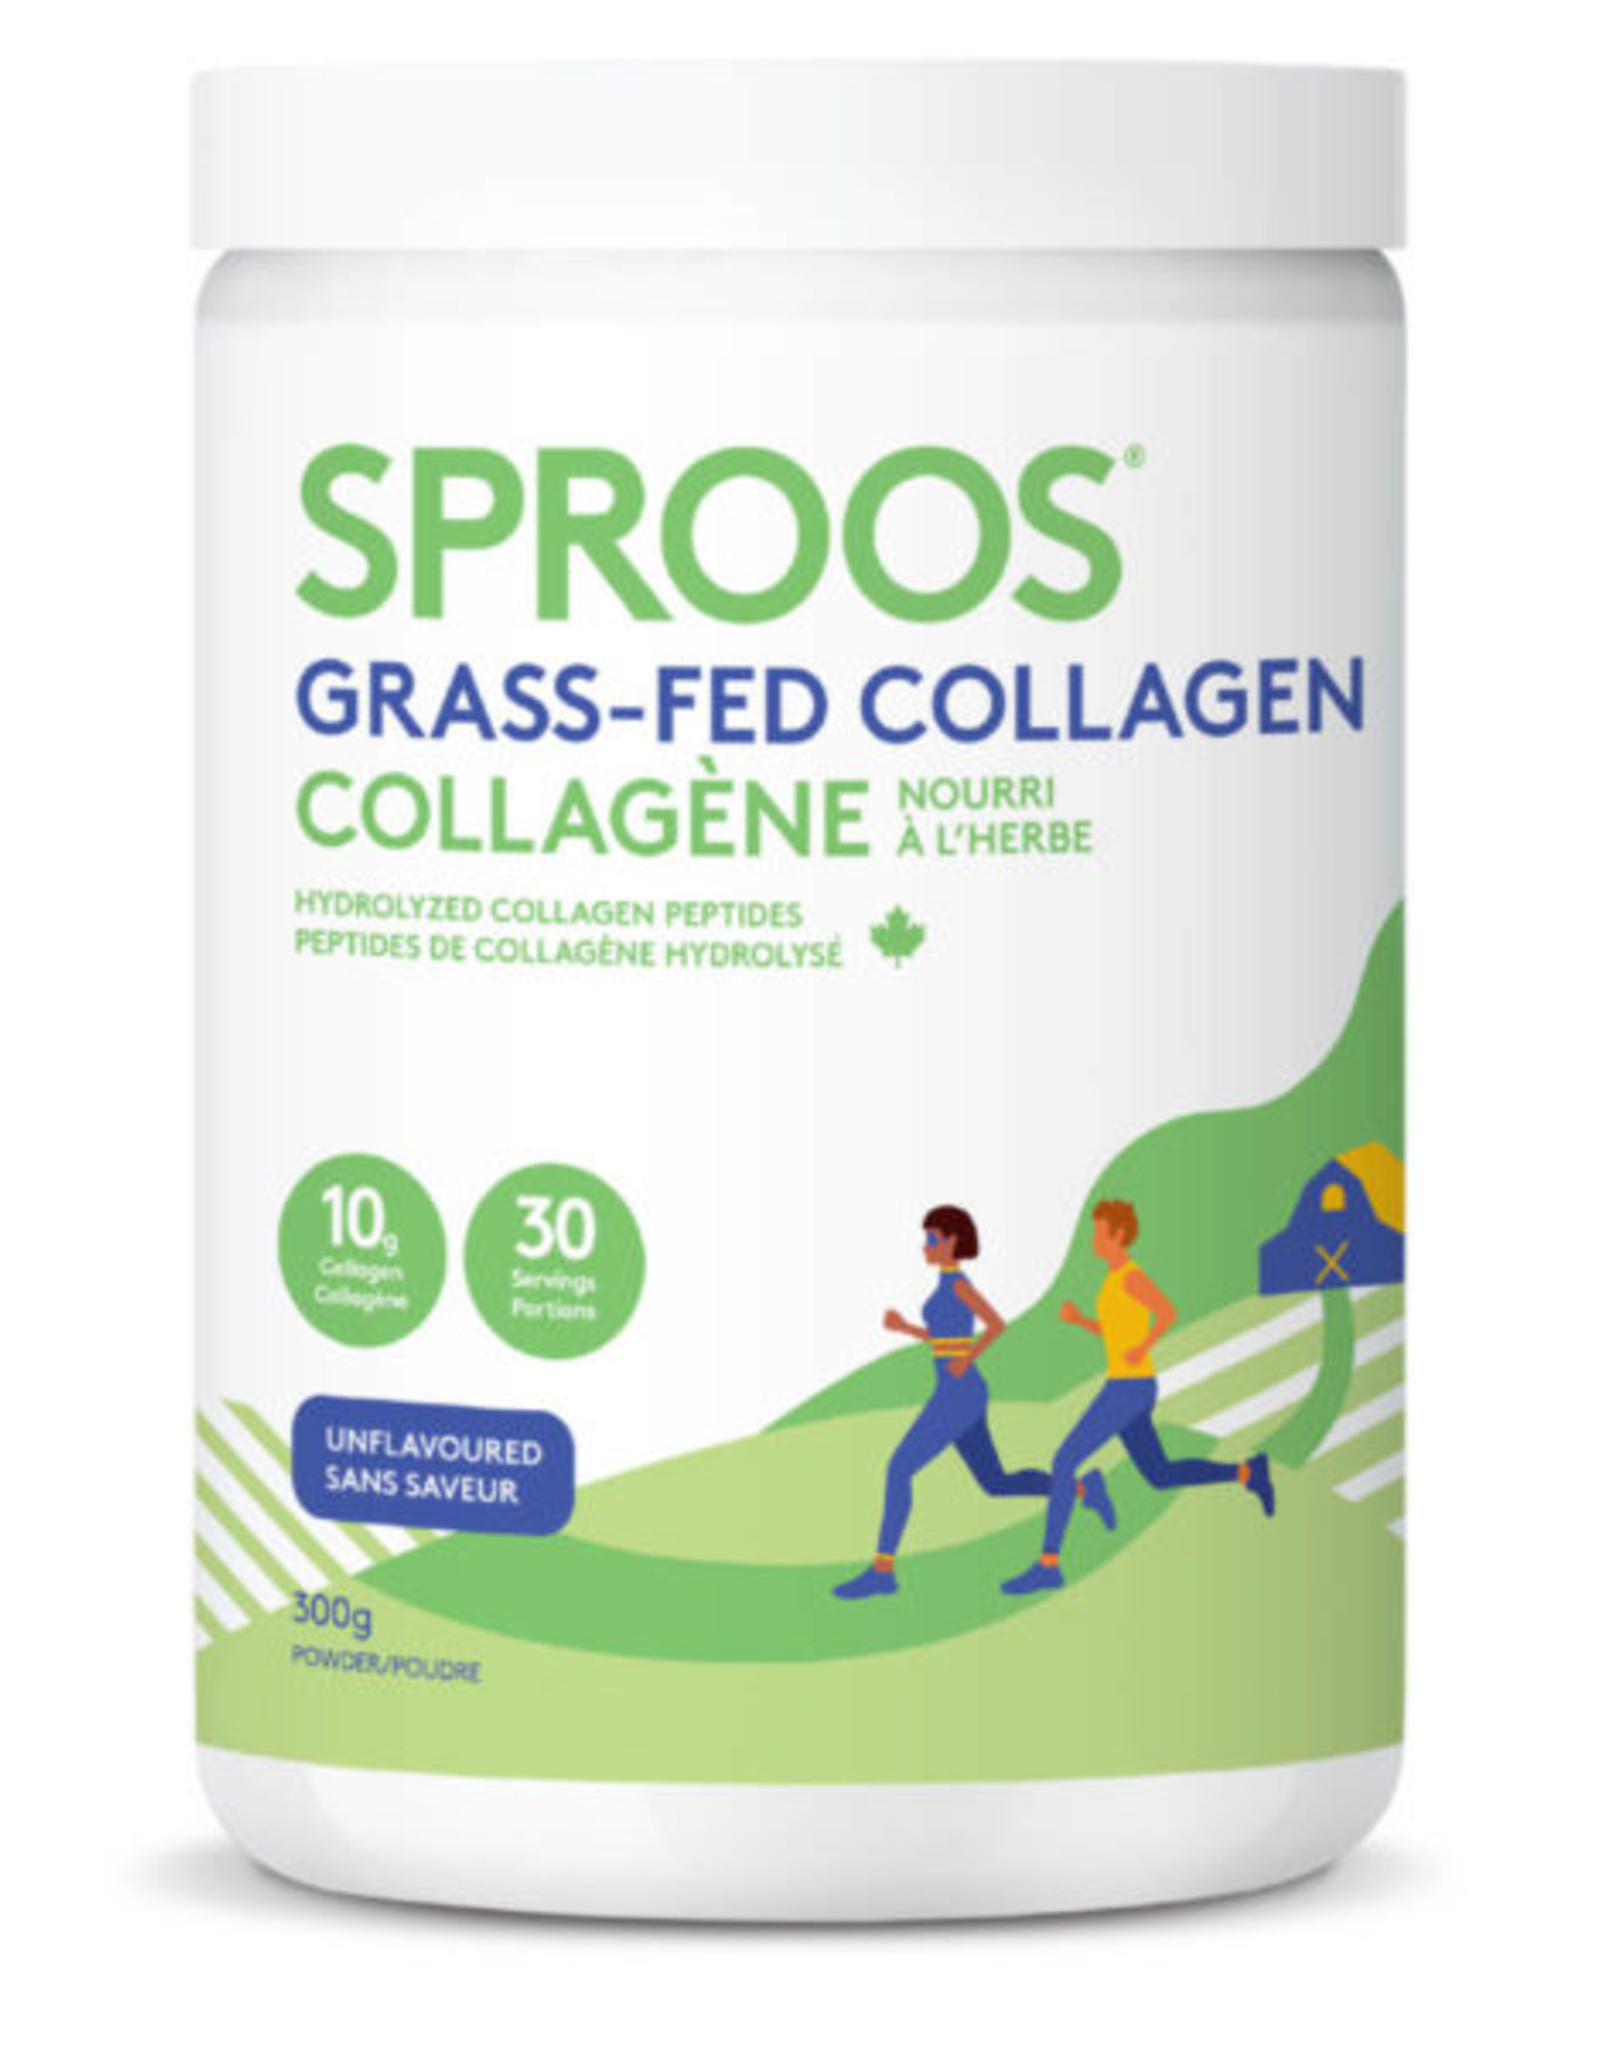 Sproos Grass-Fed Collagen